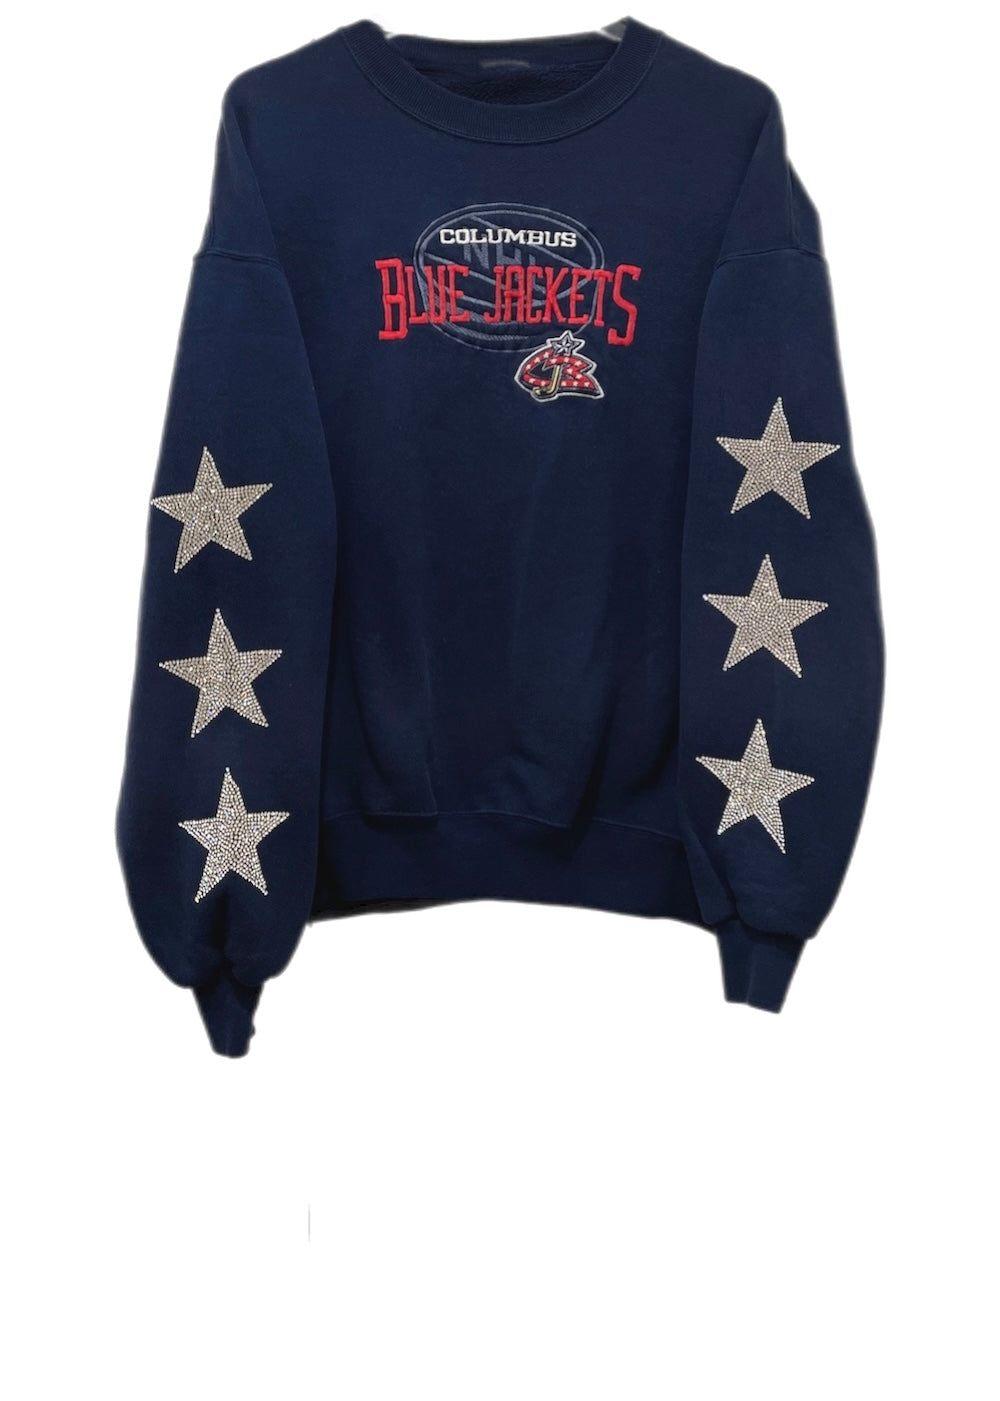 Columbus Blue Jackets, NHL One of a KIND Vintage Sweatshirt with Crystal  Star Design